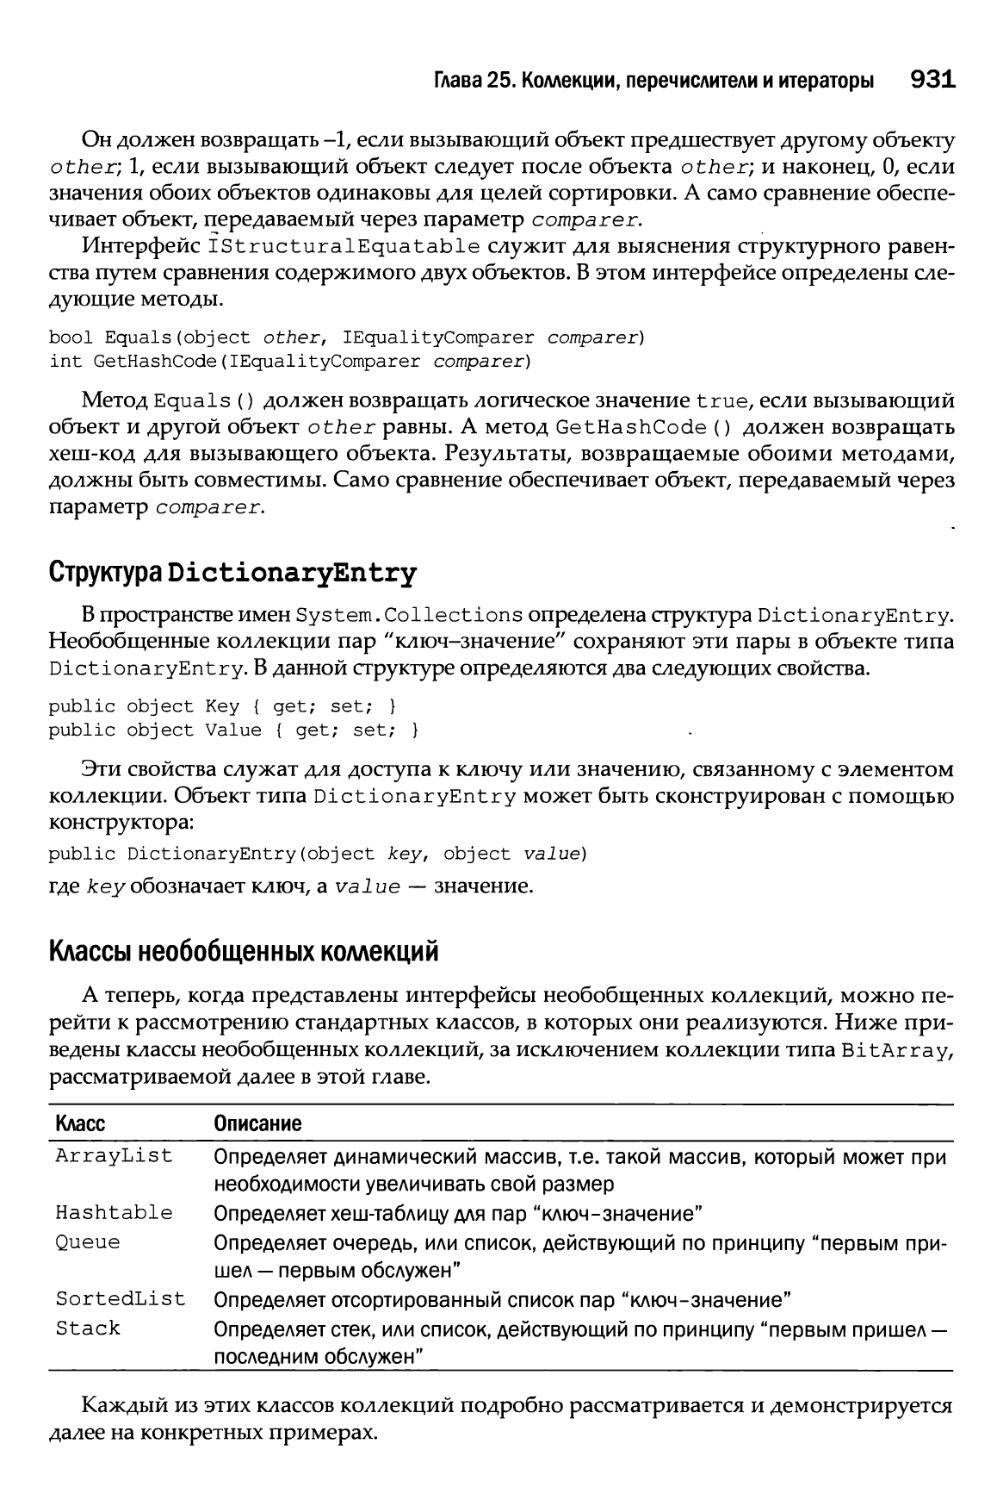 Структура DictionaryEntry
Классы необобщенных коллекций